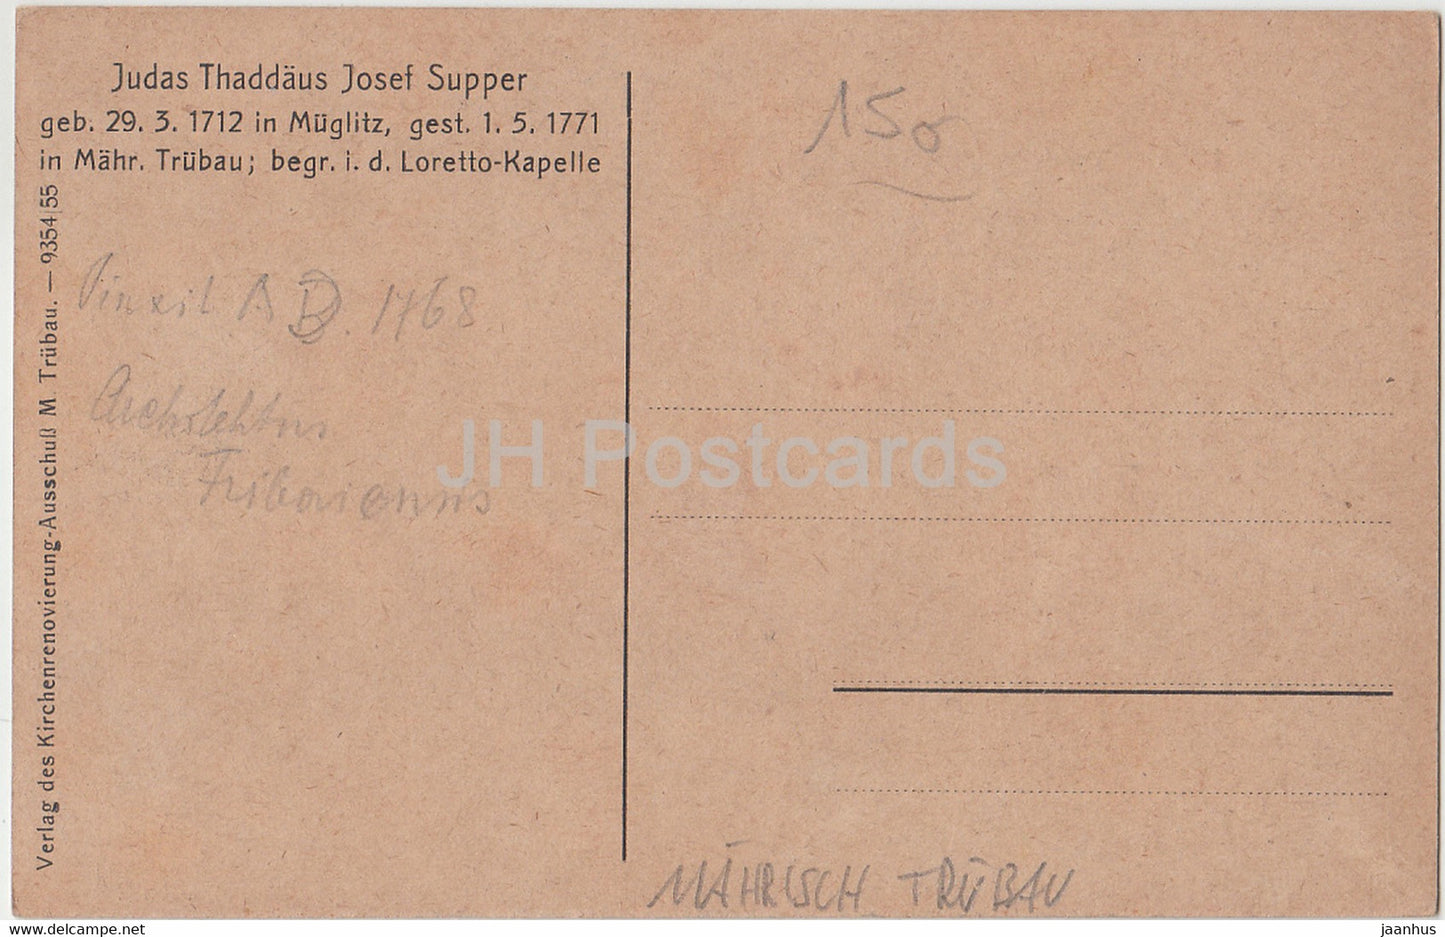 Judas Thaddaus - Josef Supper - Mahr Trubau - Moravska Trebova - Loretto Kapelle - alte Postkarte - Tschechien - gebraucht